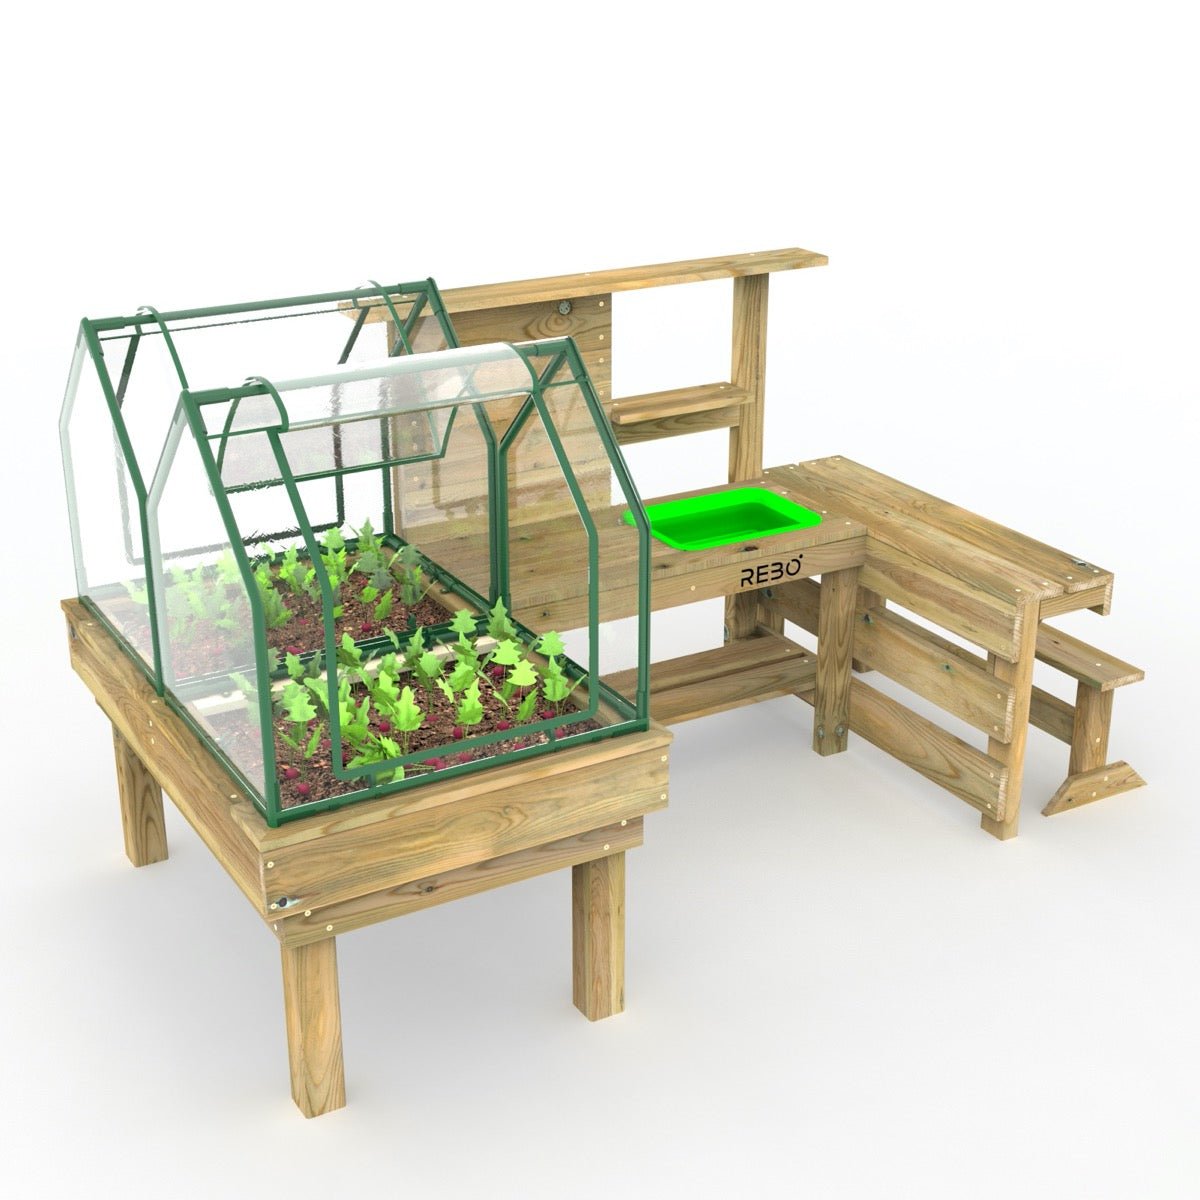 Rebo Kitchen Garden Kids Potting Table And Mini Greenhouse – Double